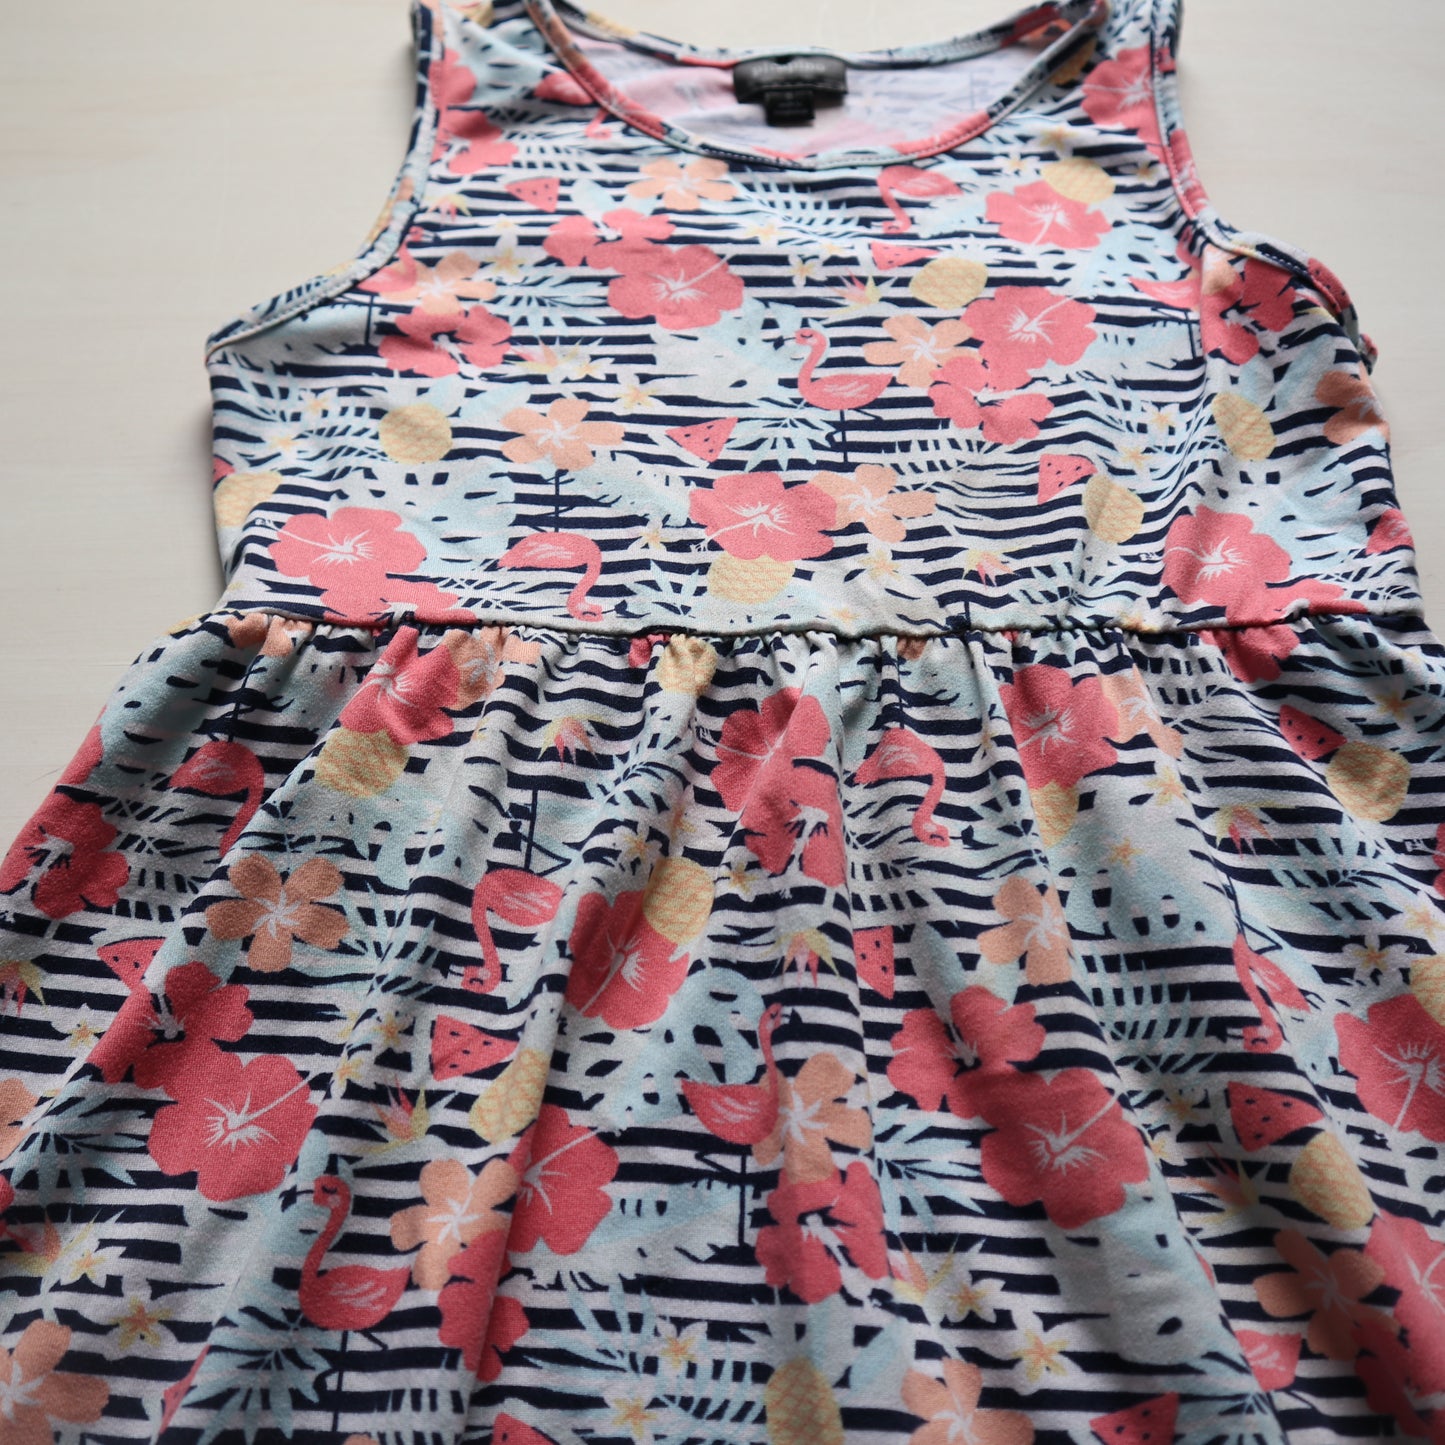 Picapino - Dress (8)